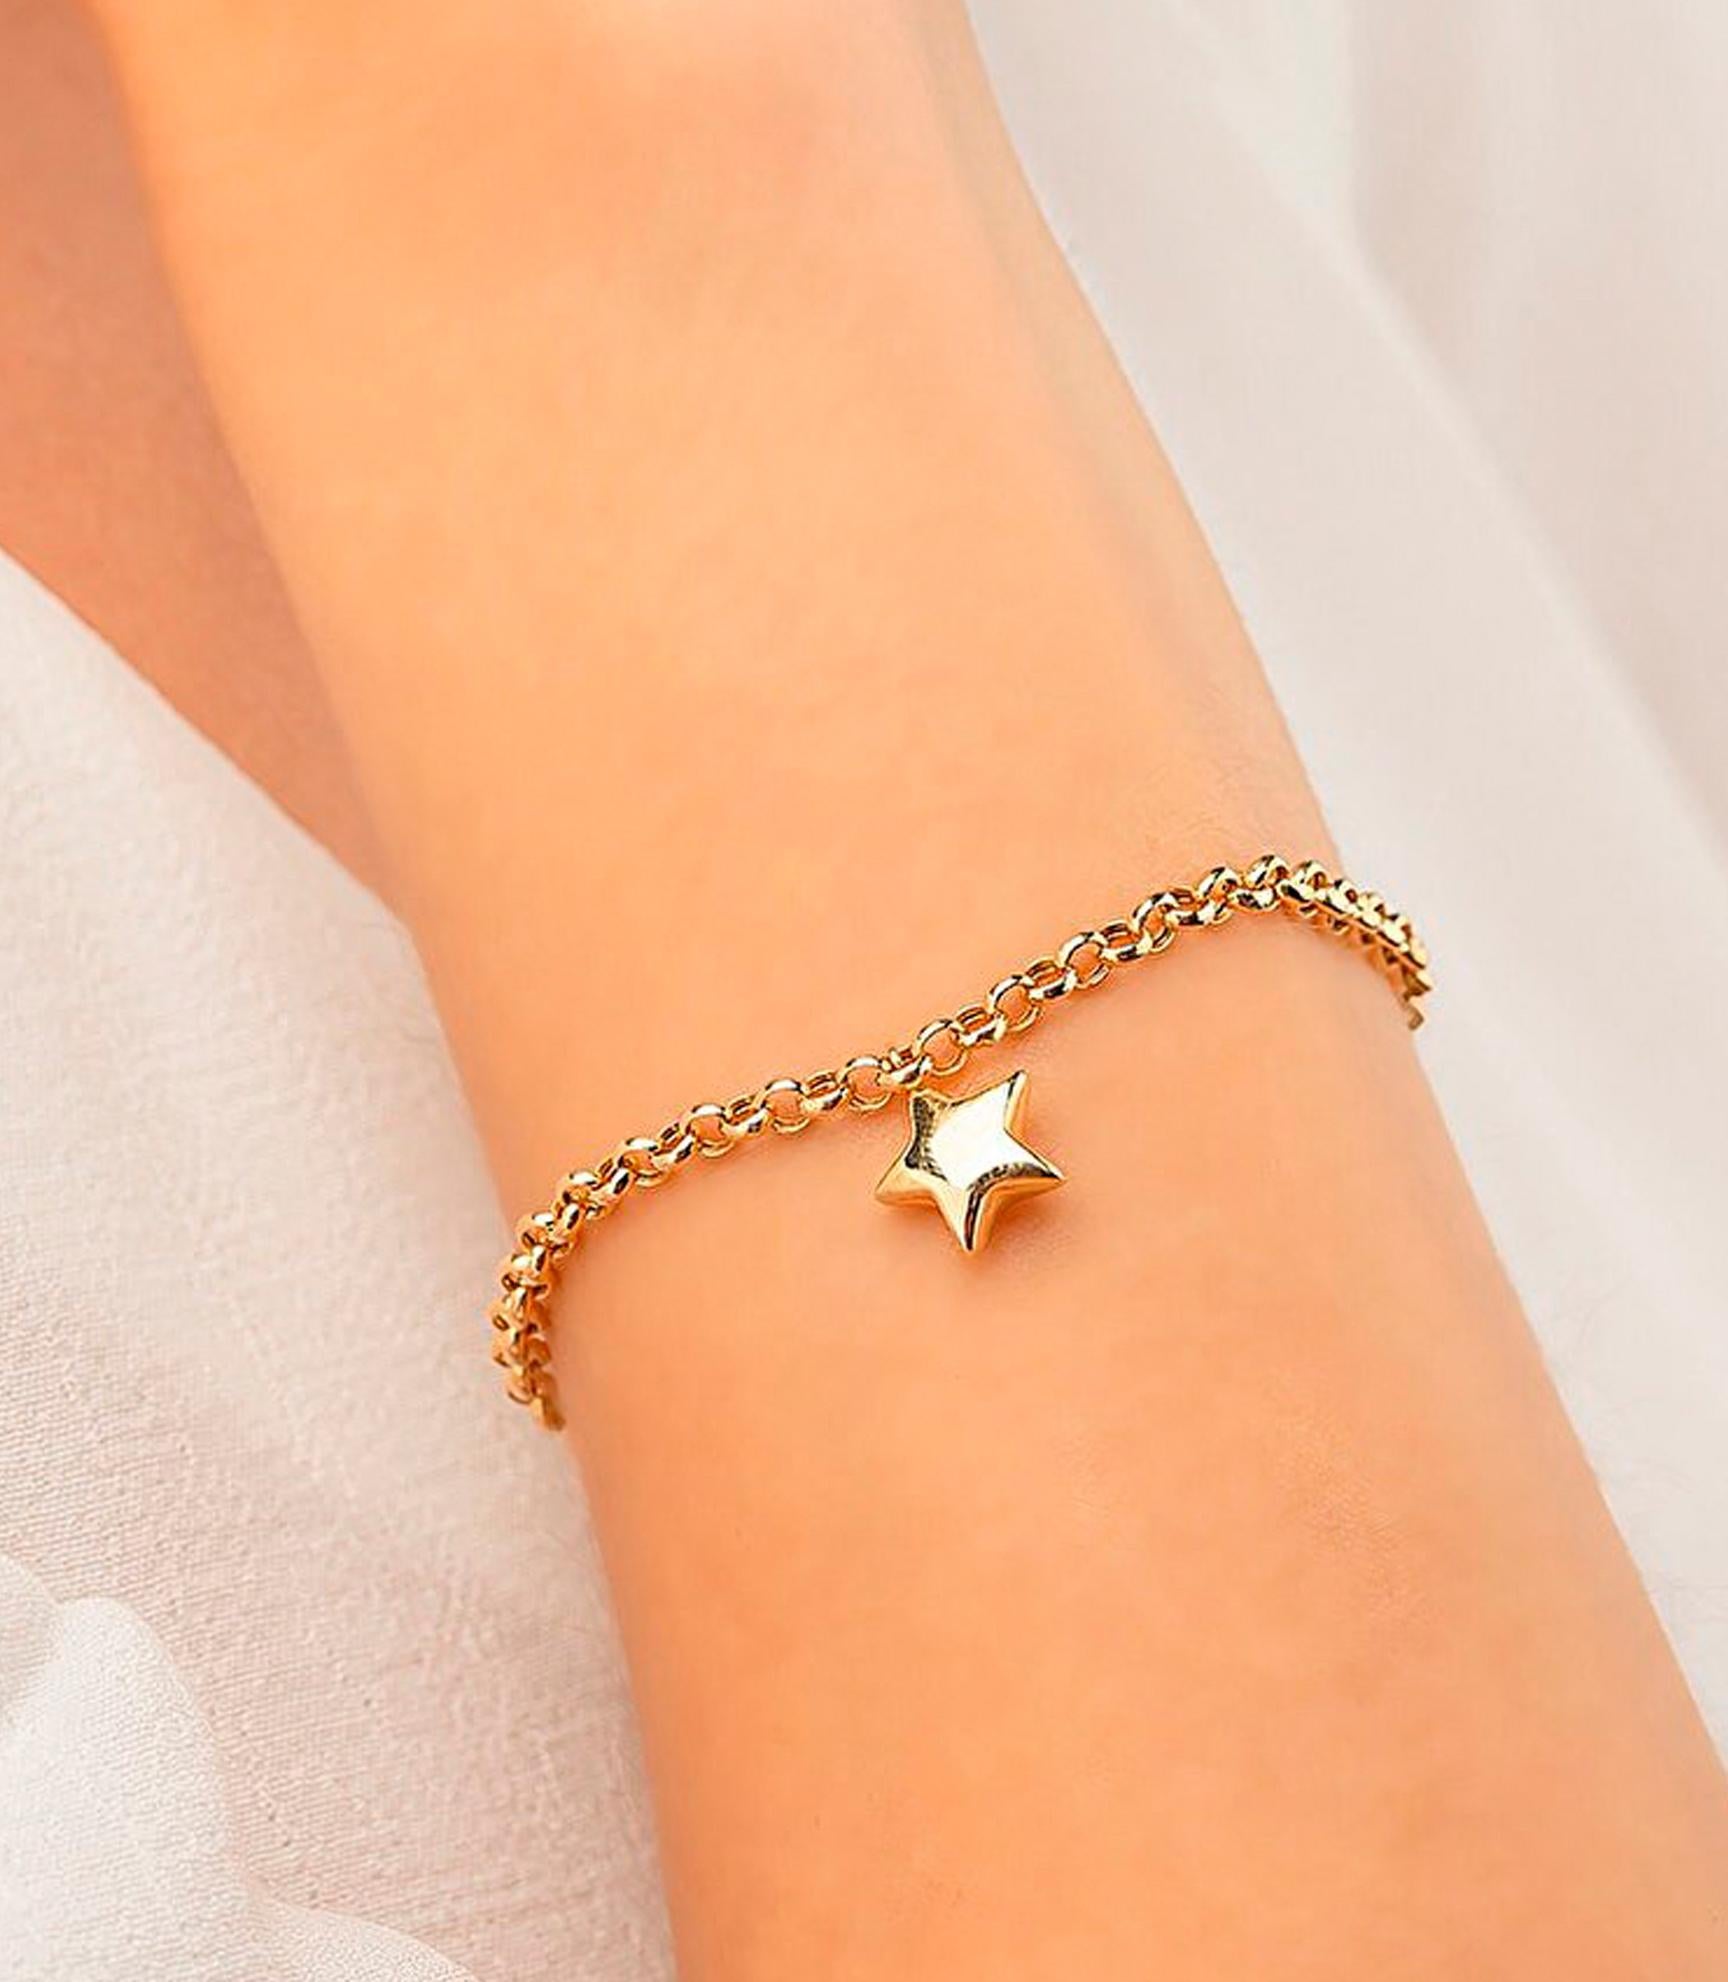 14 Karat Gold Star Charm Bracelet, Chain Bracelet with Star Shaped Pendant 1